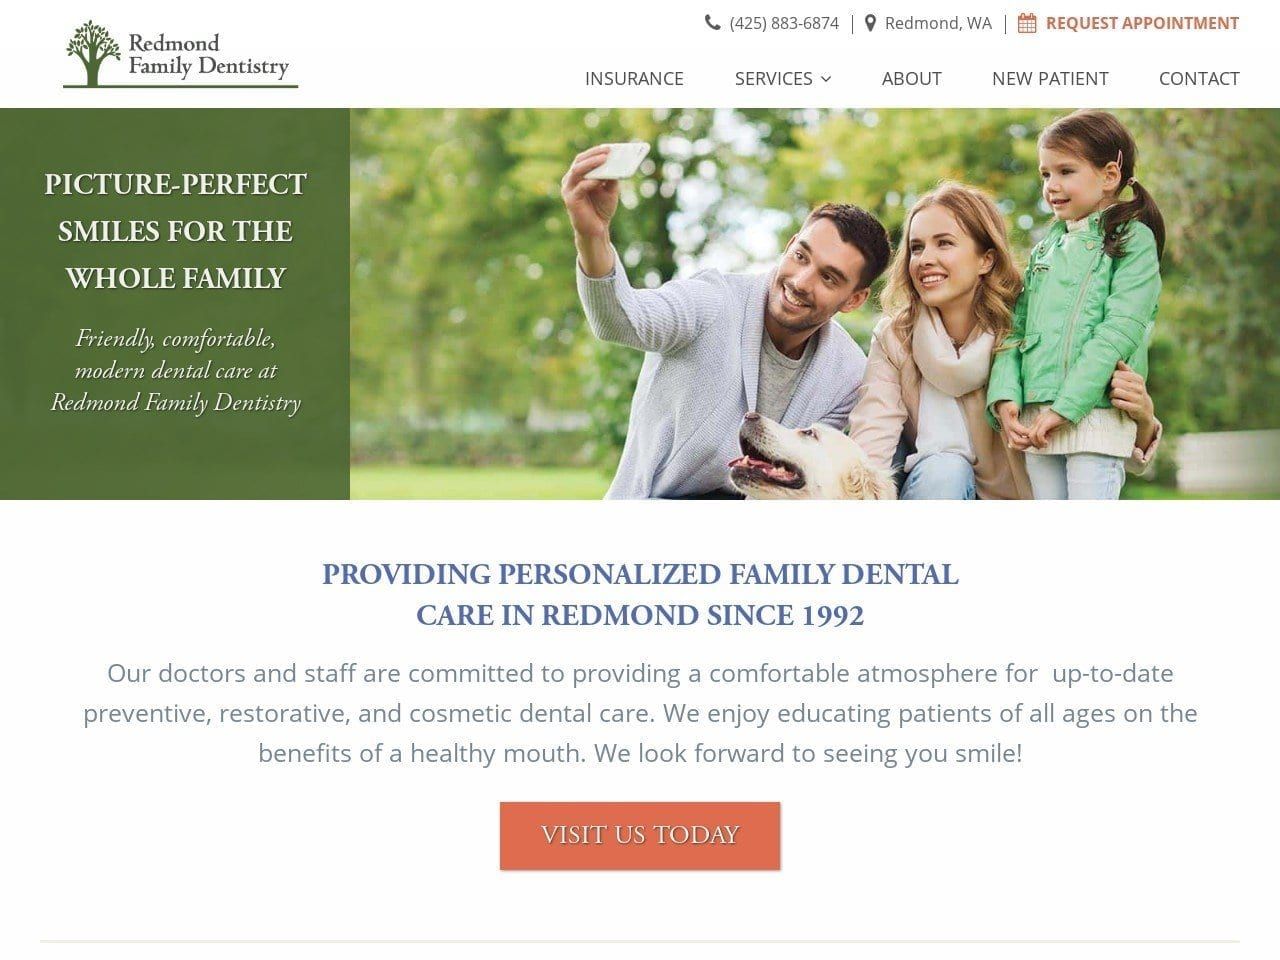 Redmond Family Dentist Website Screenshot from redmondfamilydentistry.com